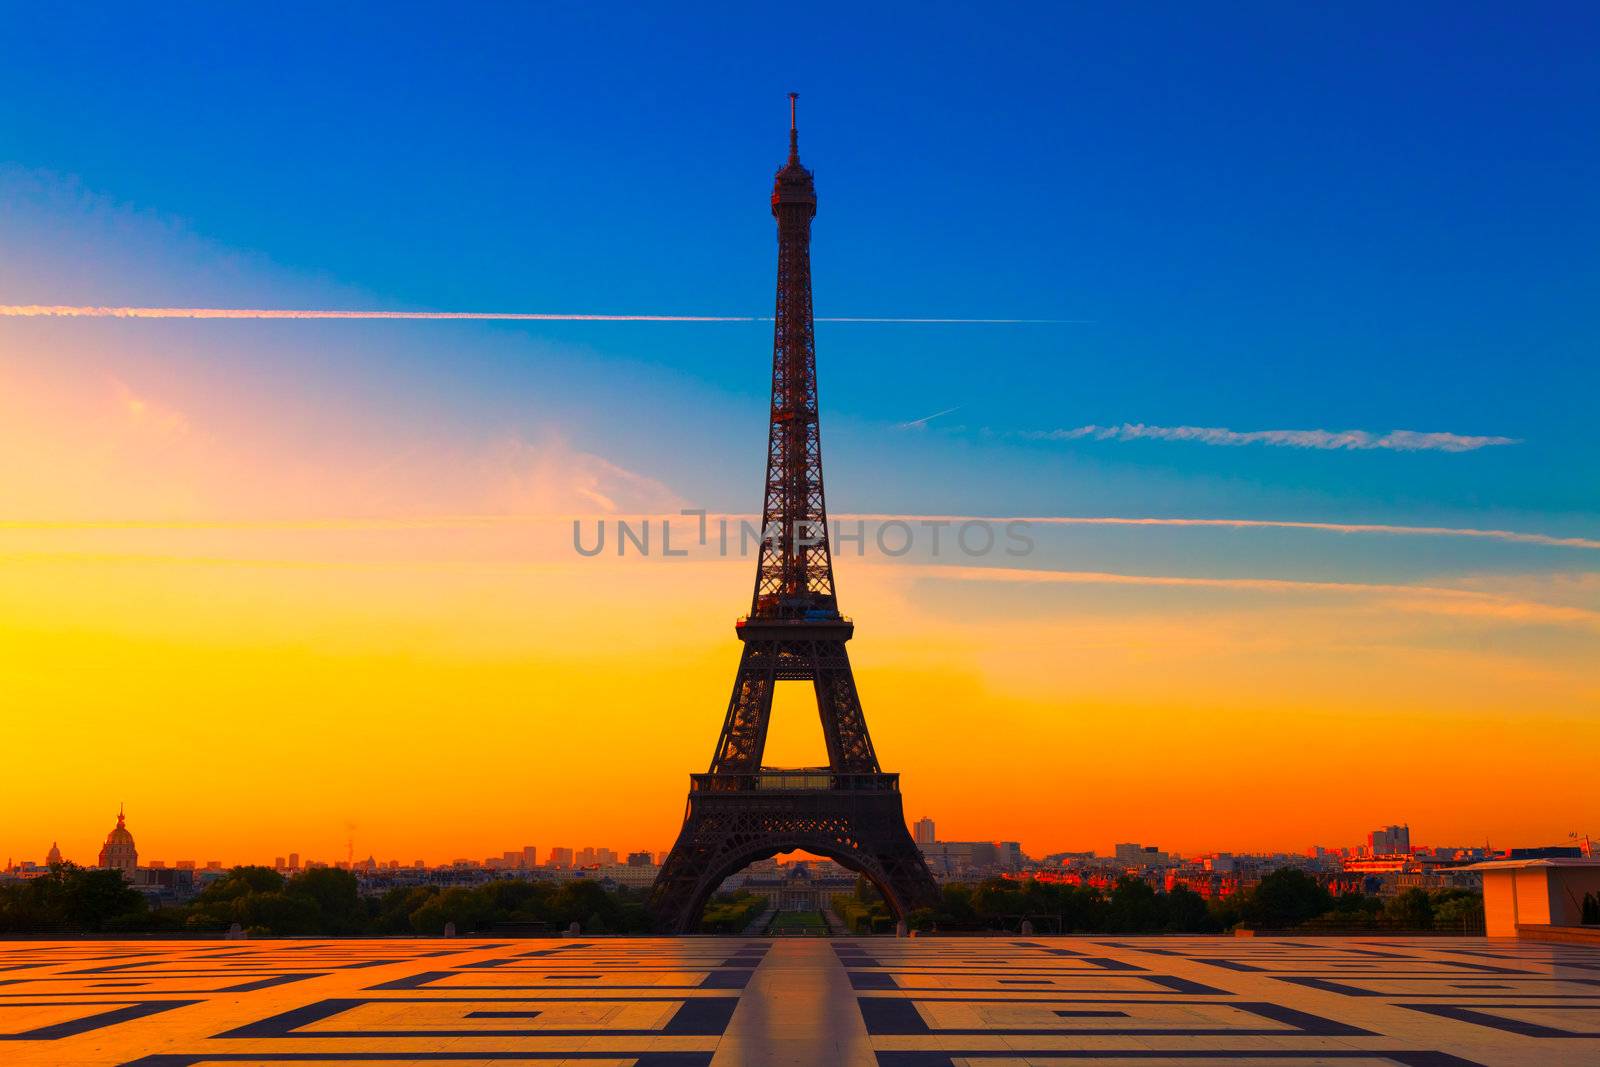 Paris, France by Tom